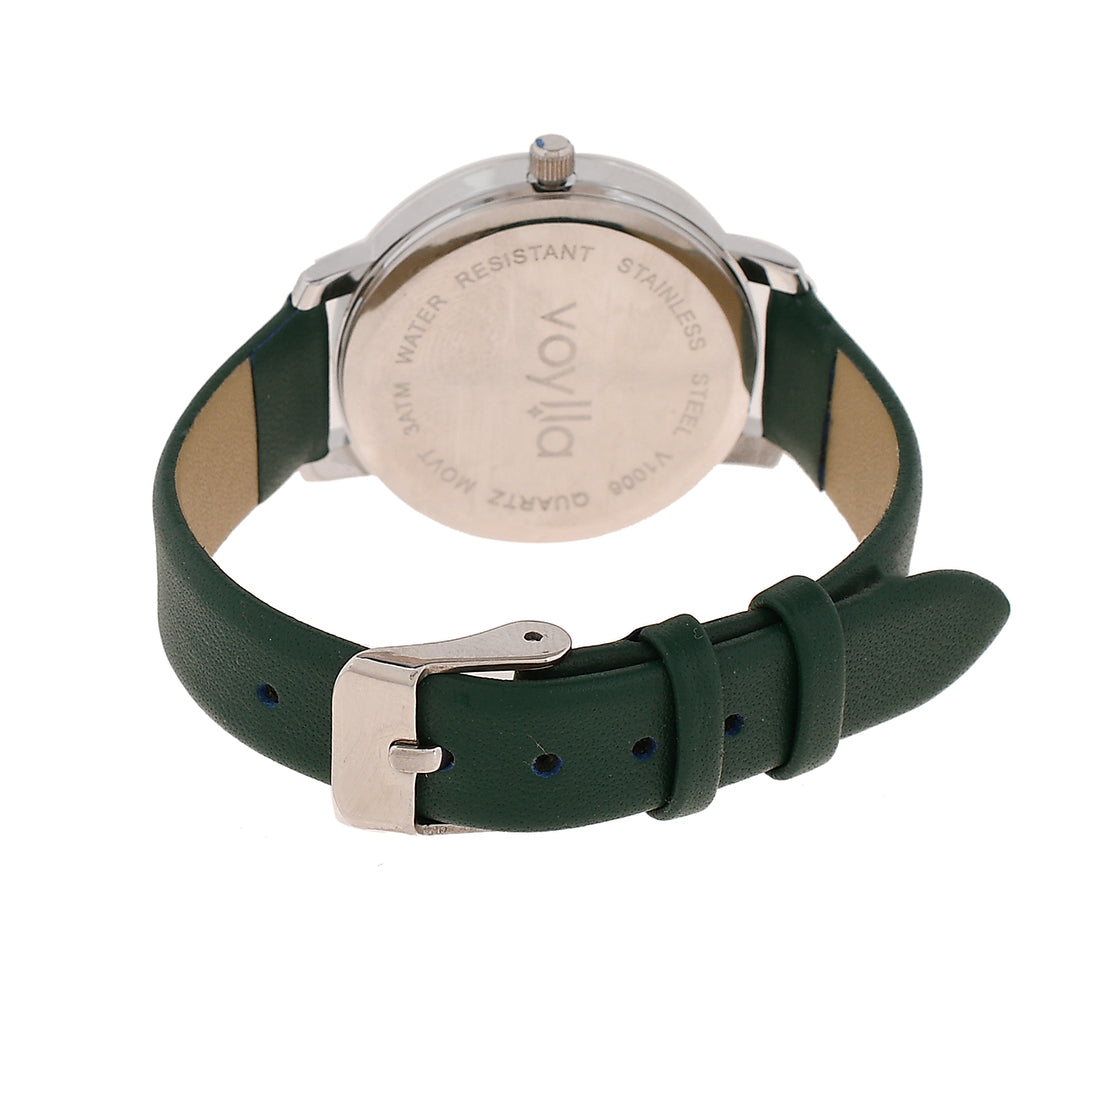 Voylla Studded Green Dial Watch